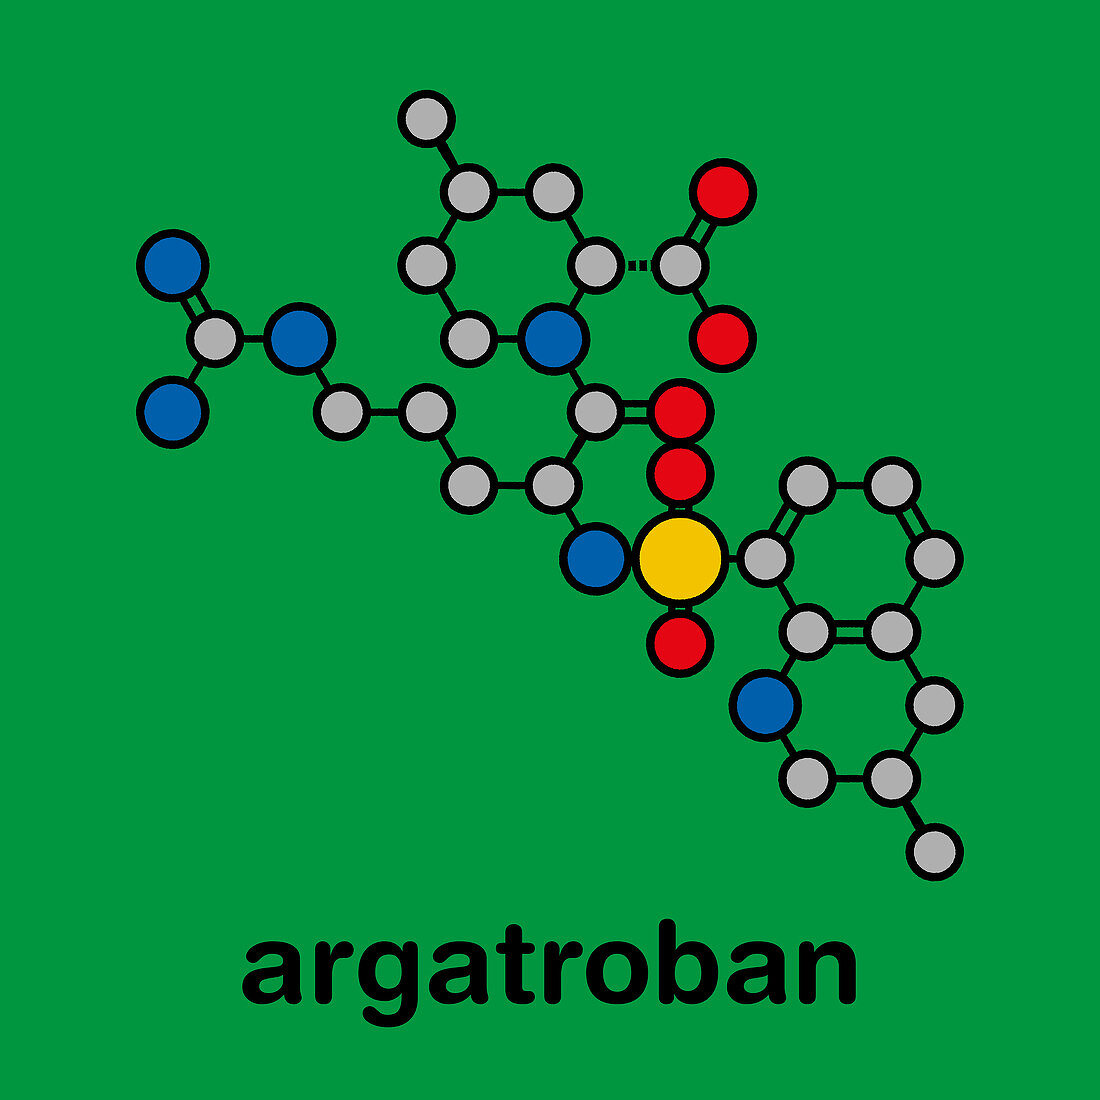 Argatroban anticoagulant drug molecule, illustration